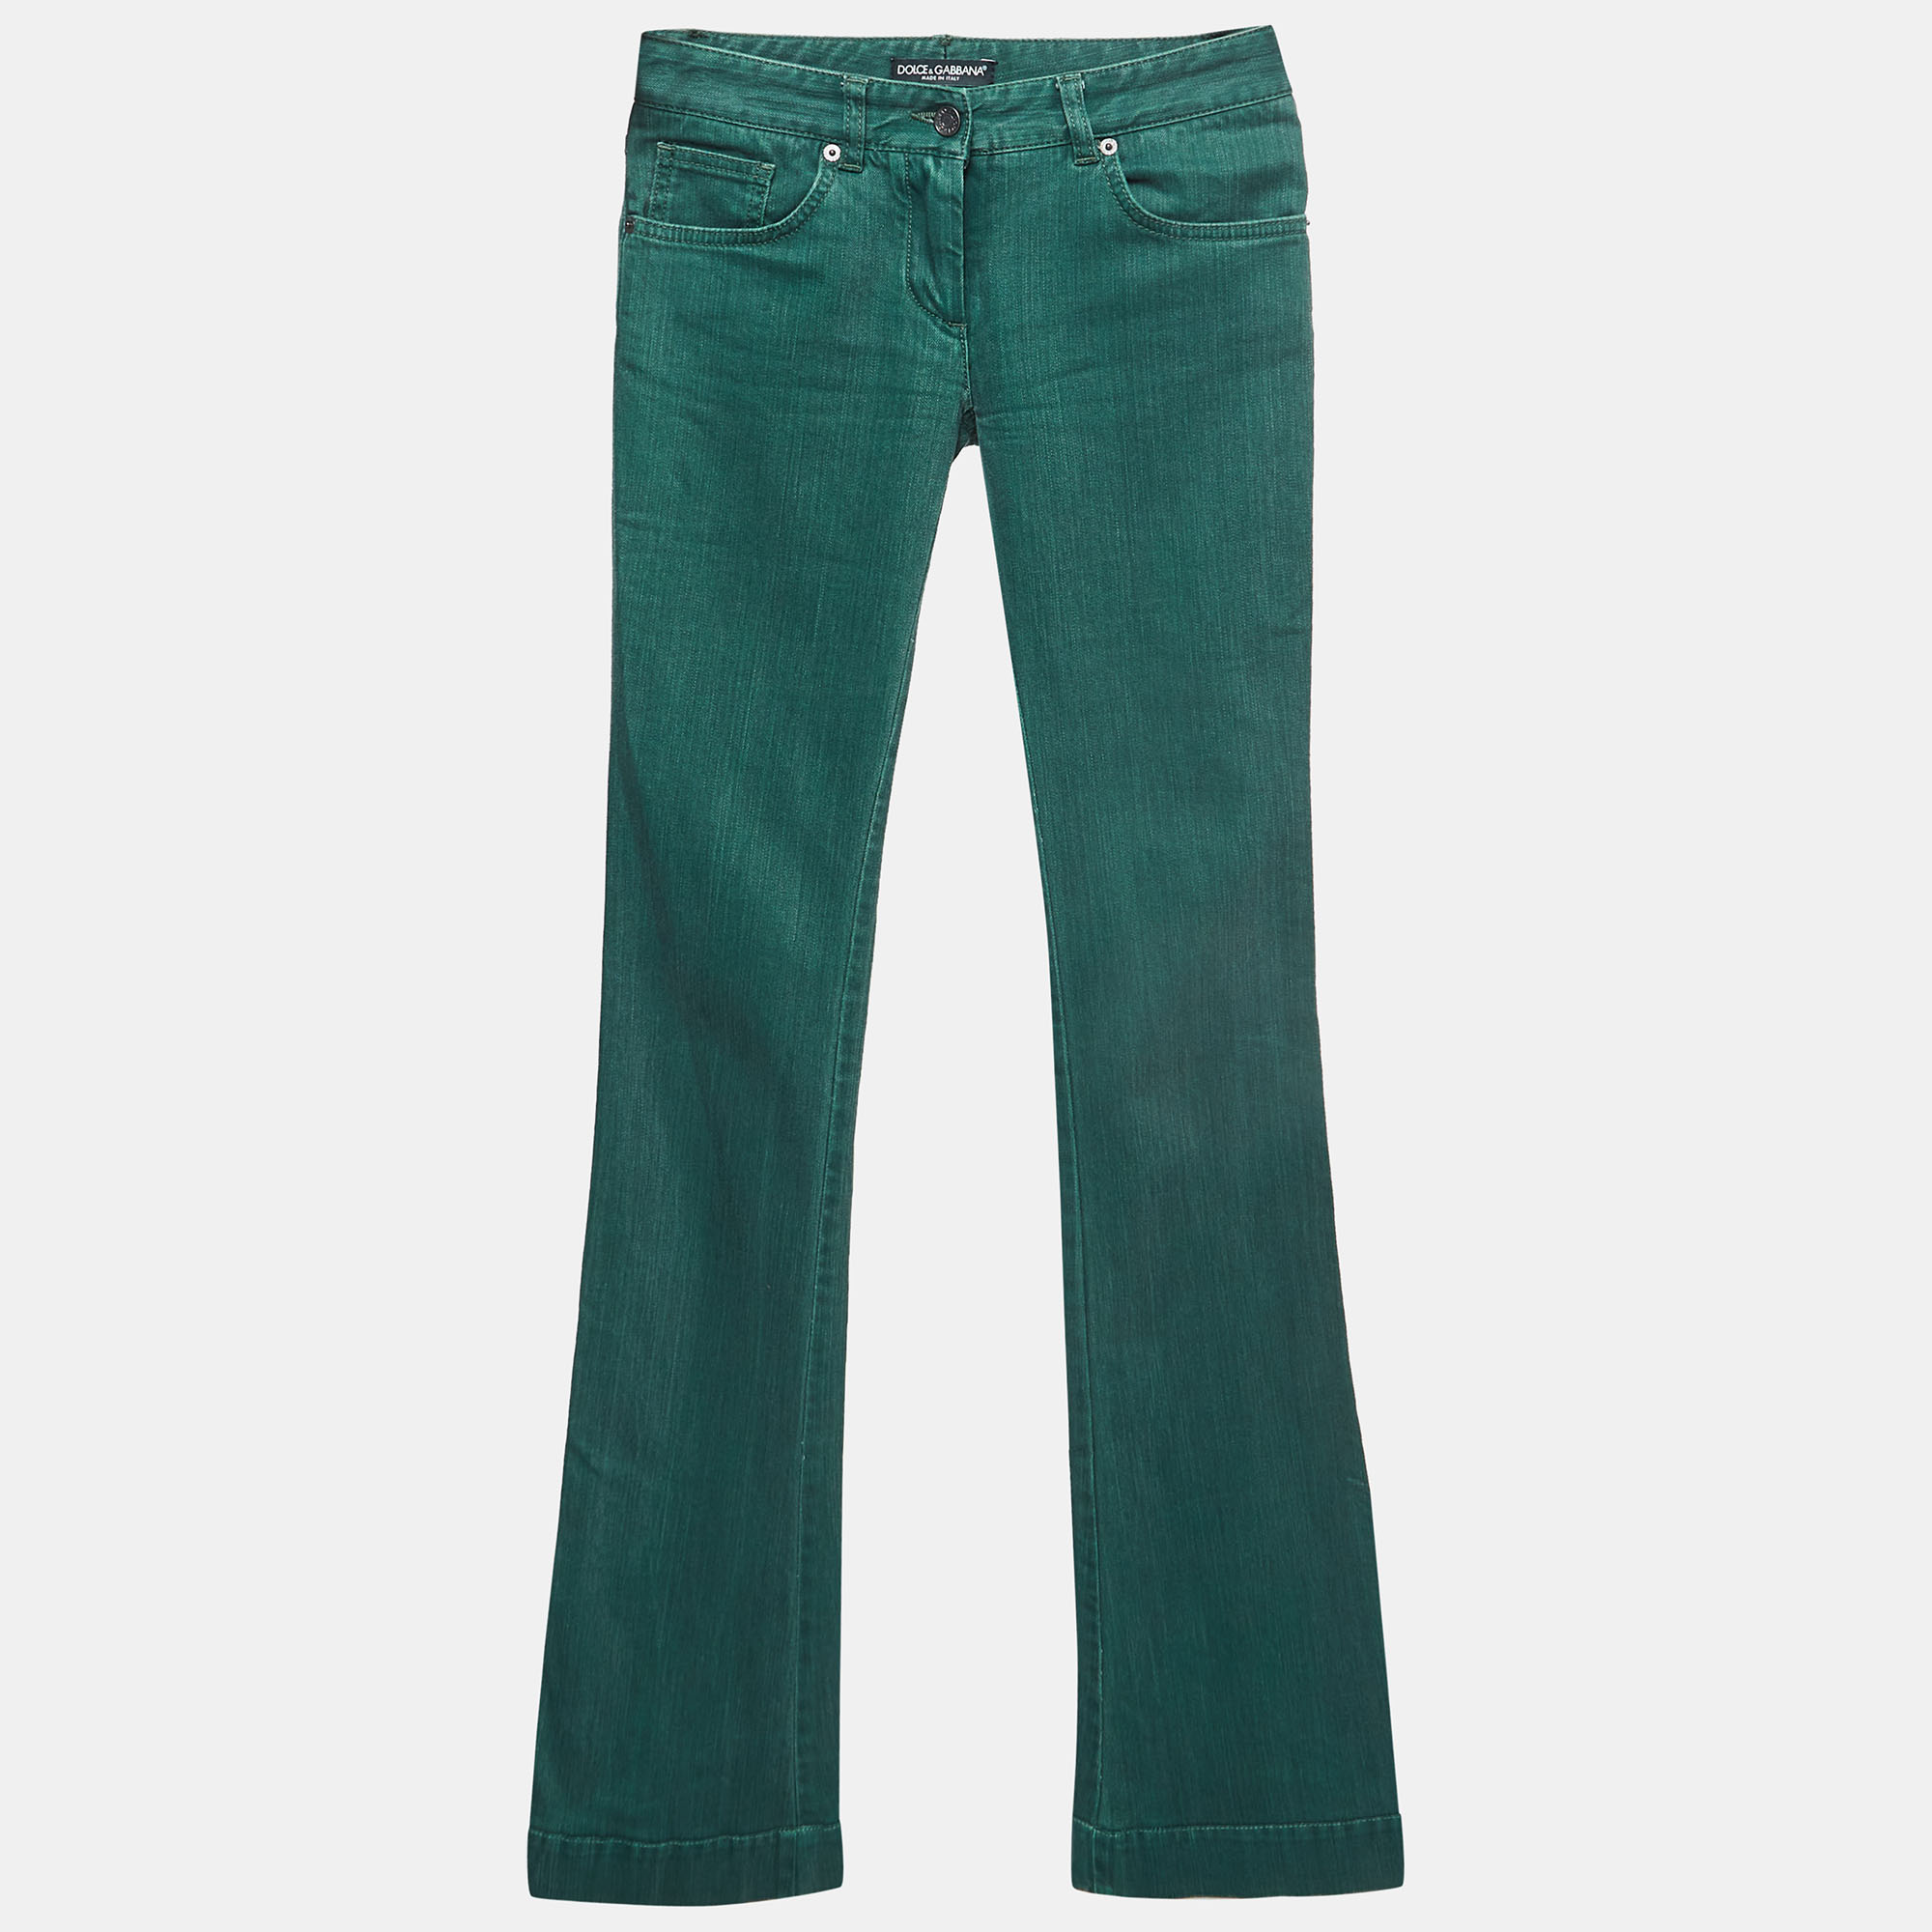 Dolce & gabbana green slub denim flared jeans s waist 27''